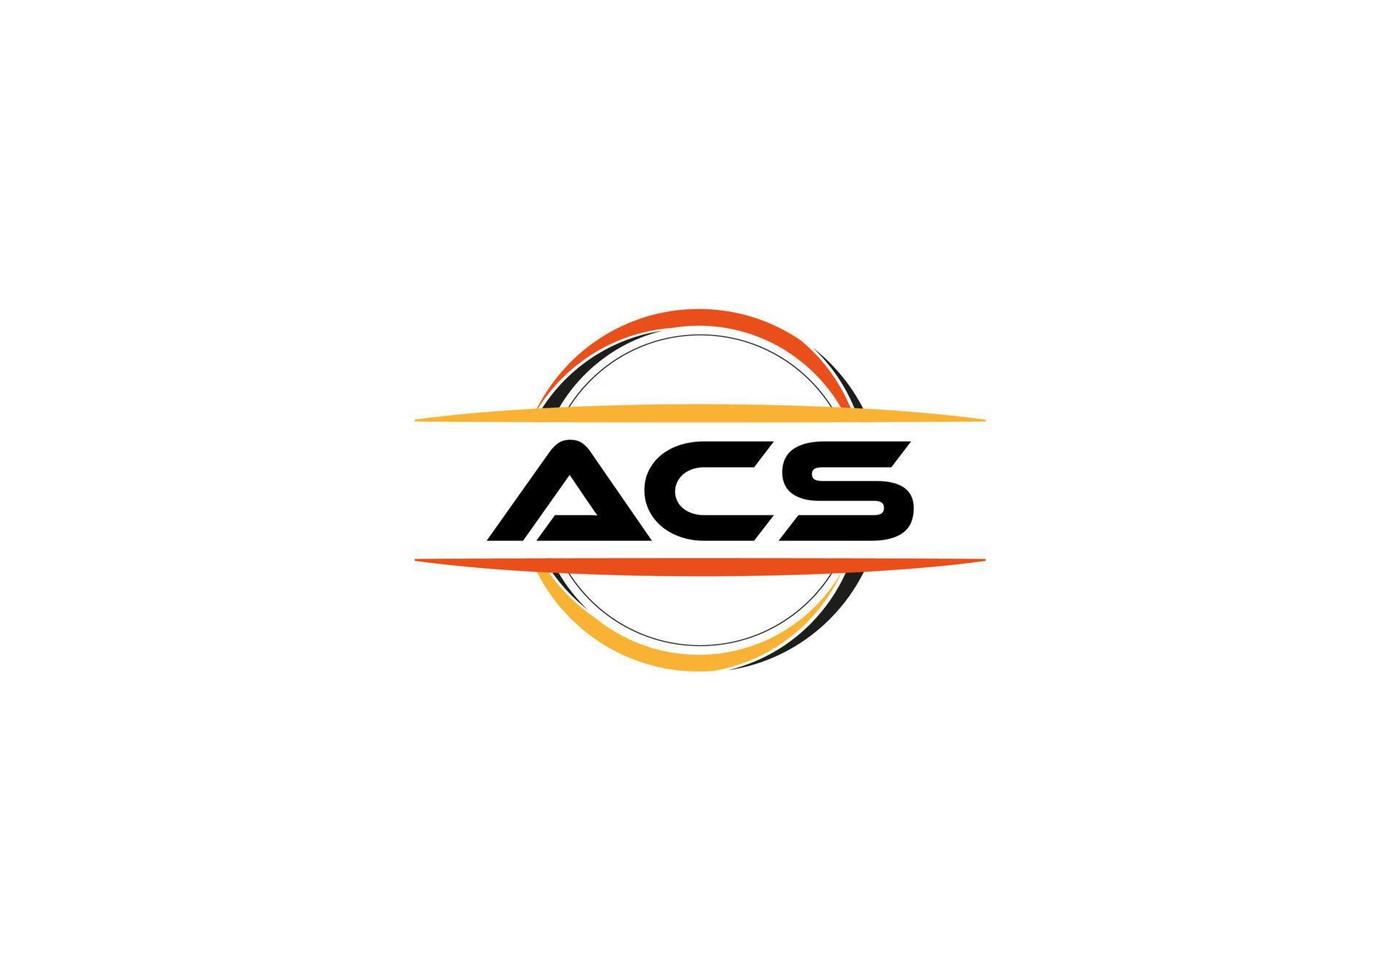 ACS letter royalty mandala shape logo. ACS brush art logo. ACS logo for a company, business, and commercial use. vector